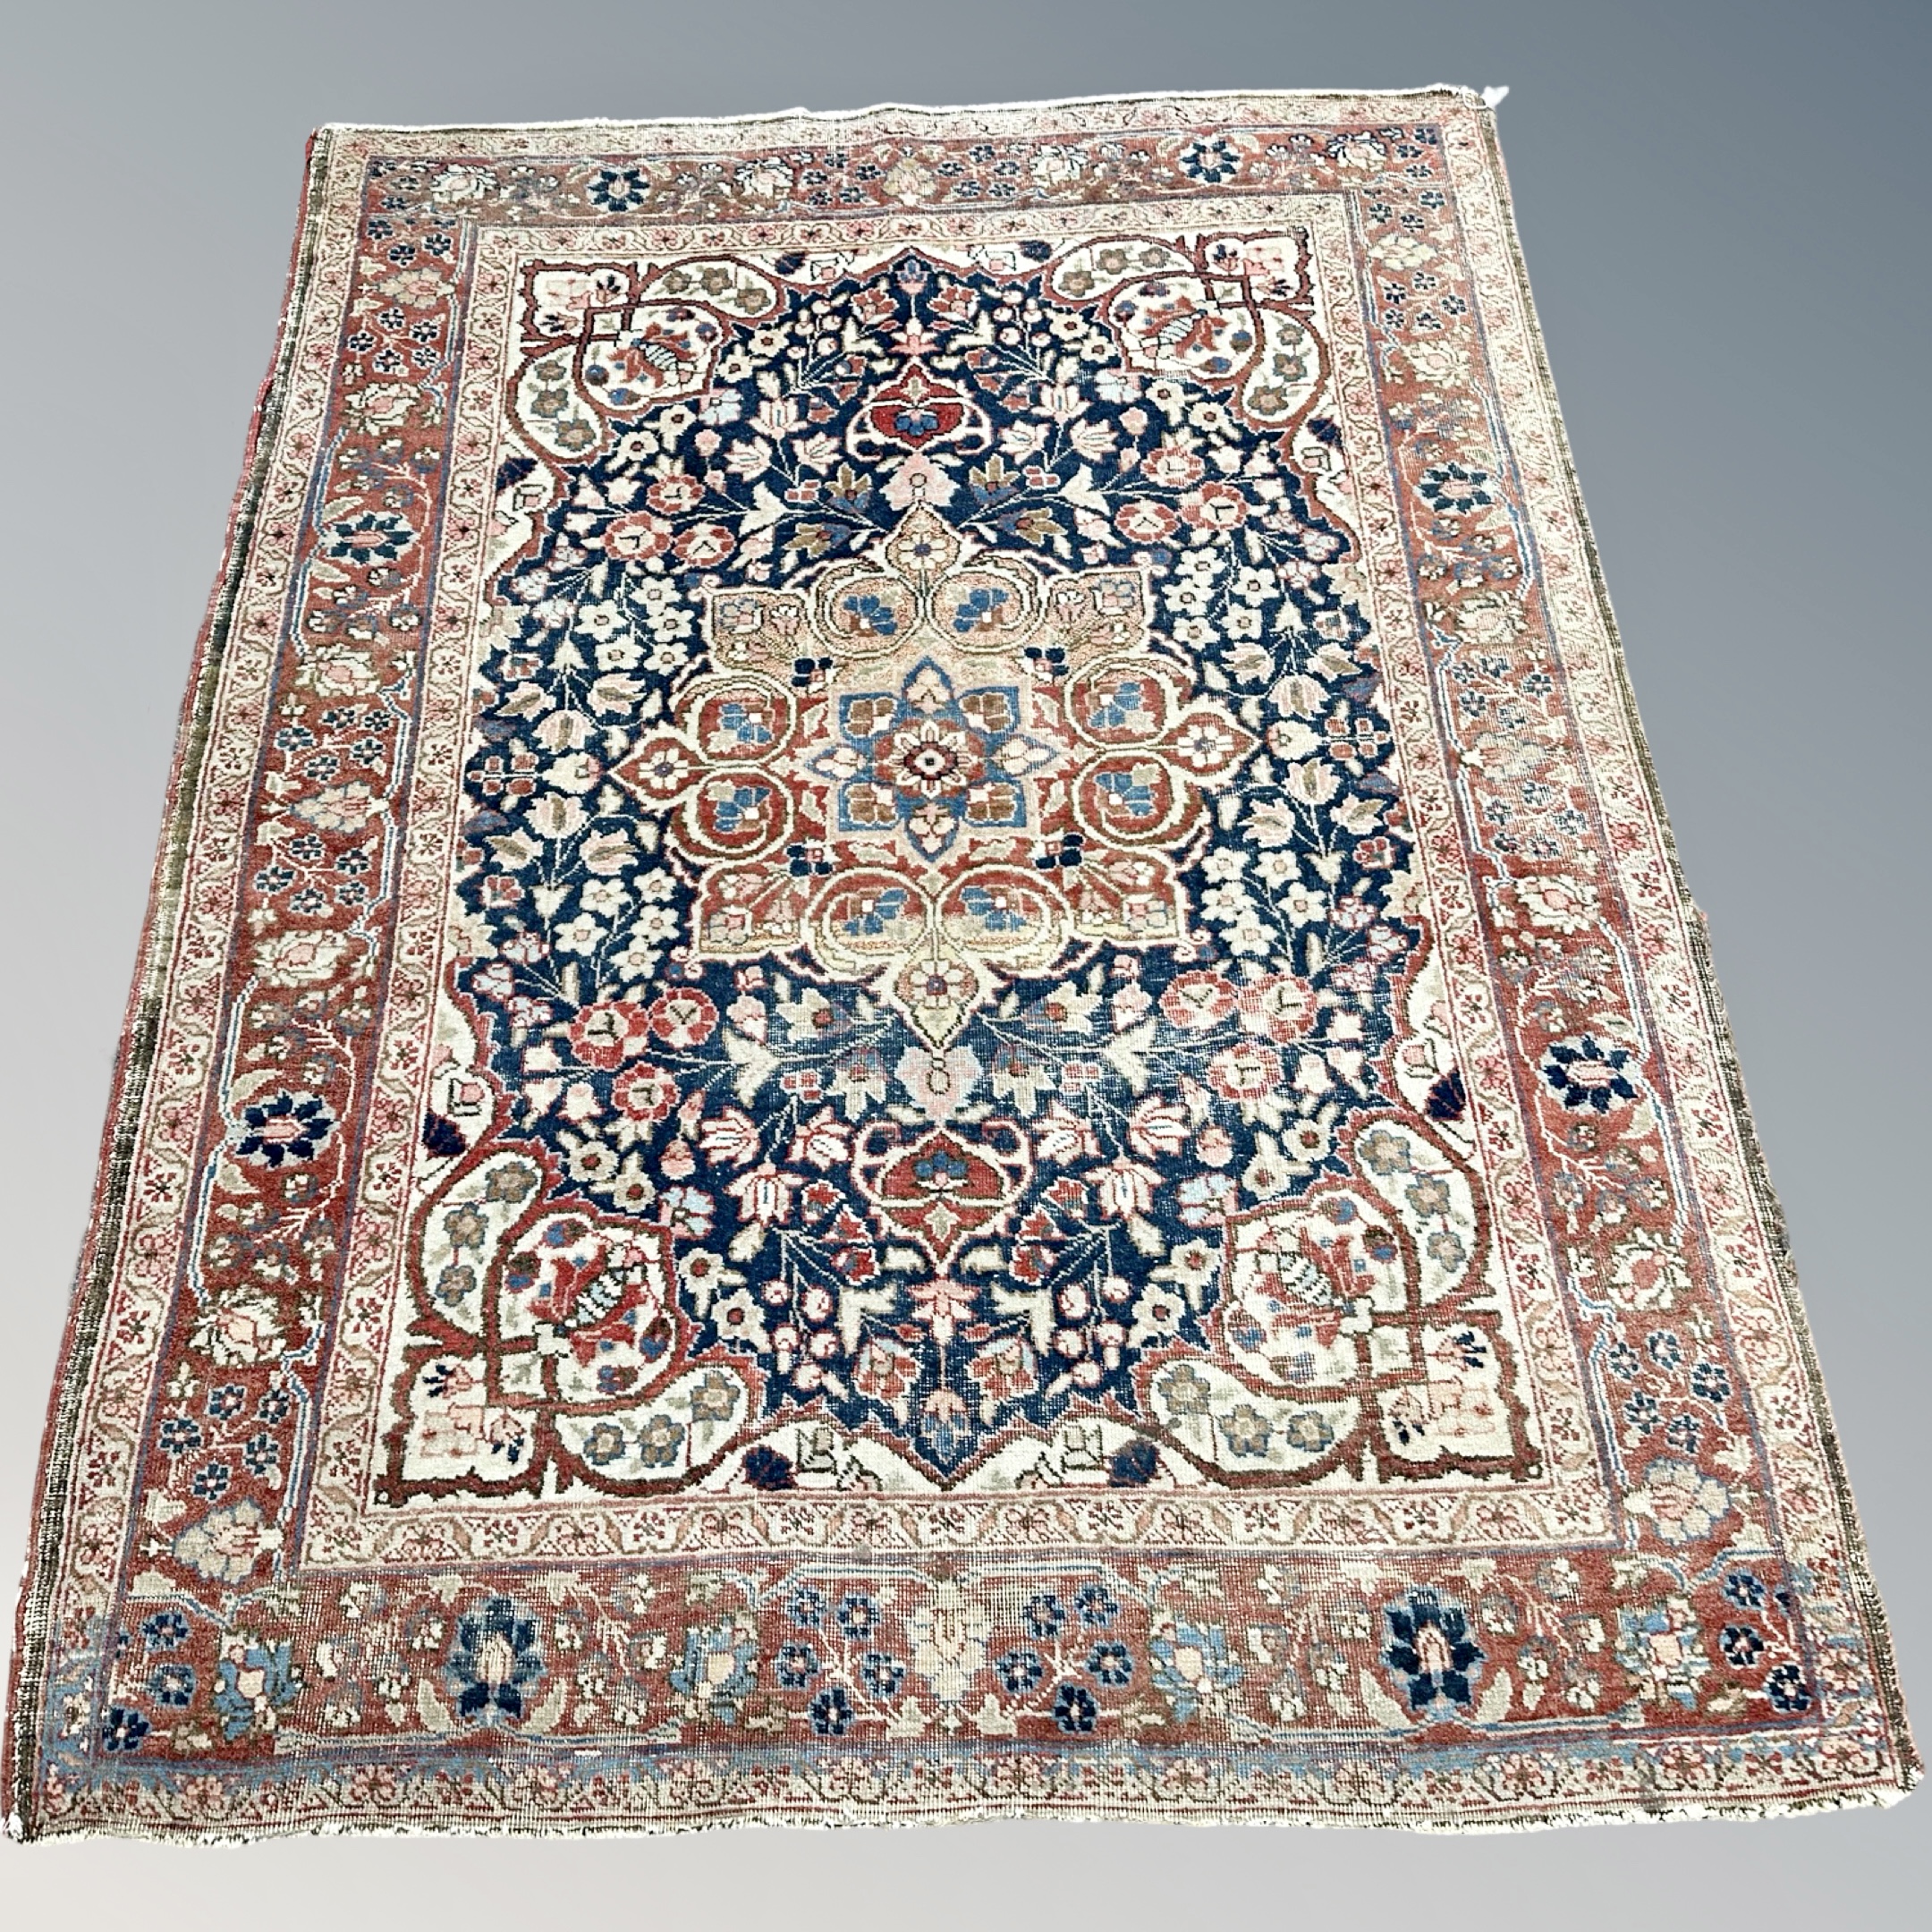 An antique Bakhtiari rug, West Iran, circa 1920, 188cm by 138cm.